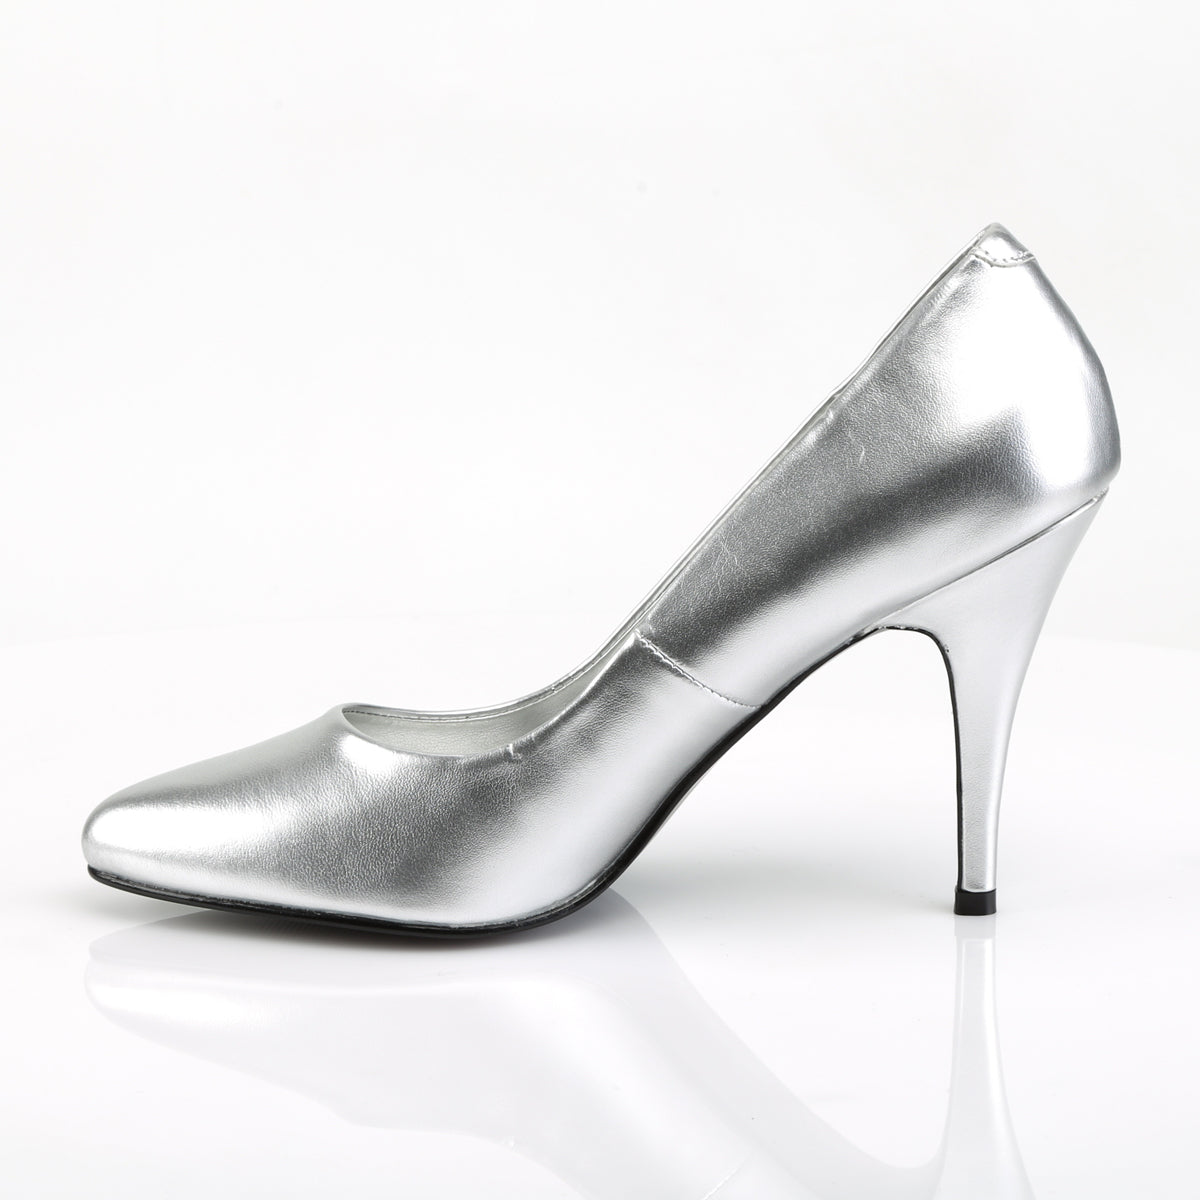 VANITY-420 Pleaser Shoes 4 Inch Heel Silver Fetish Footwear-Pleaser- Sexy Shoes Pole Dance Heels